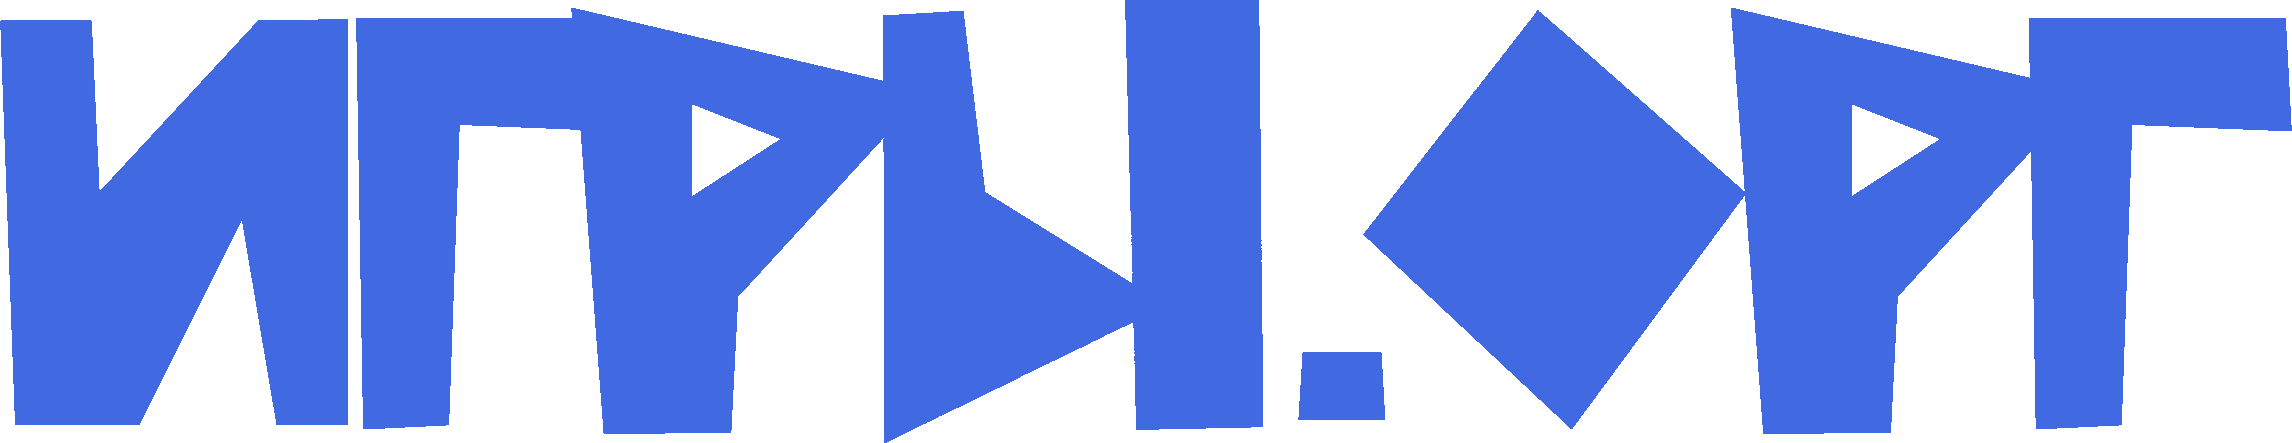 Логотип ИГРЫ.ОРГ